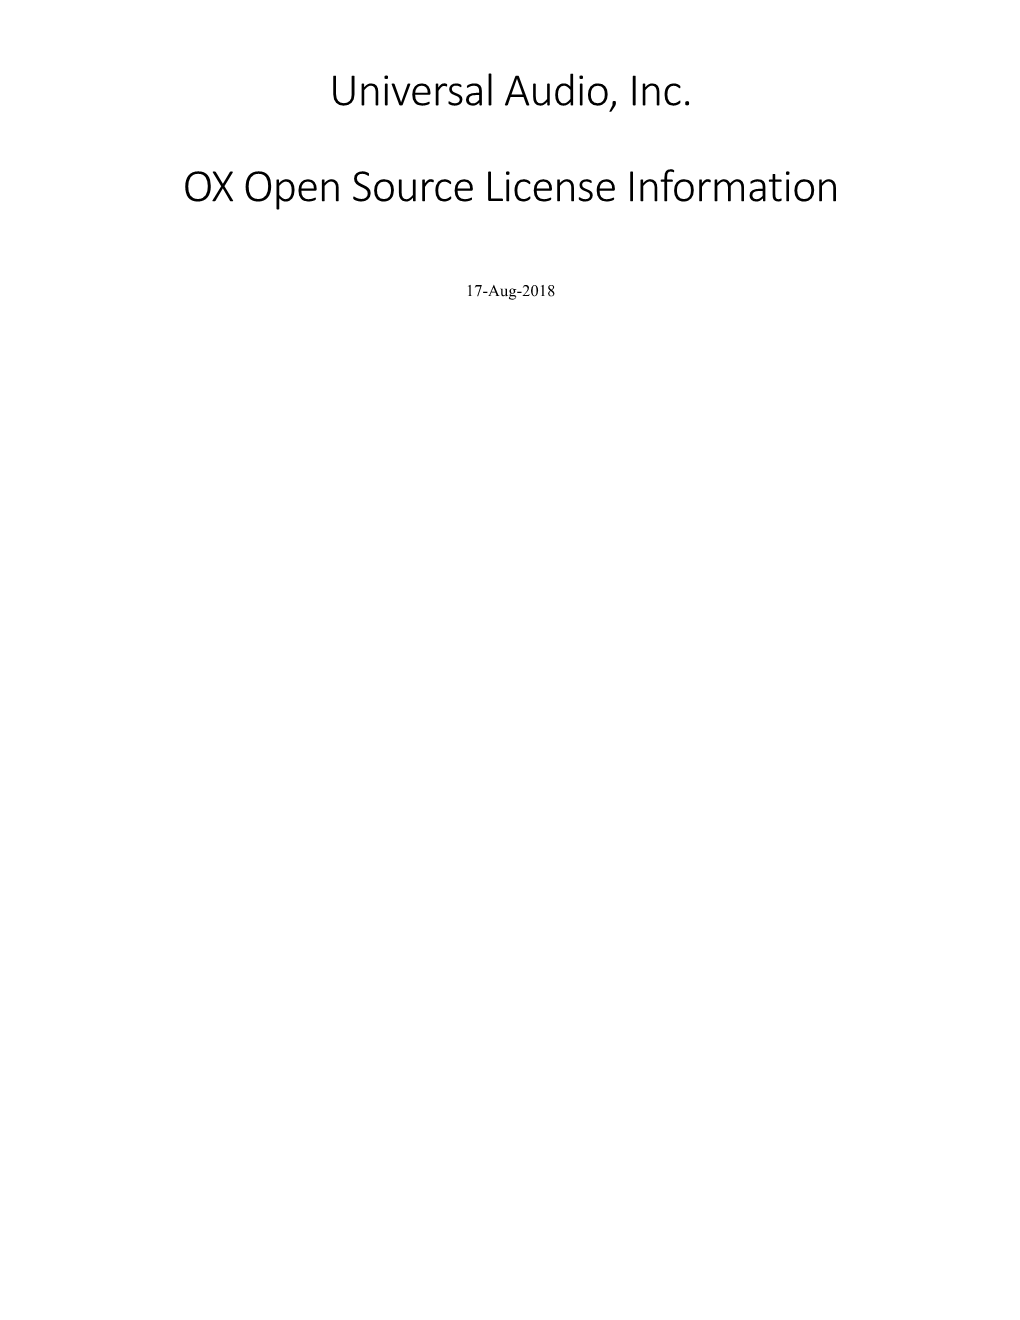 Universal Audio, Inc. OX Open Source License Information